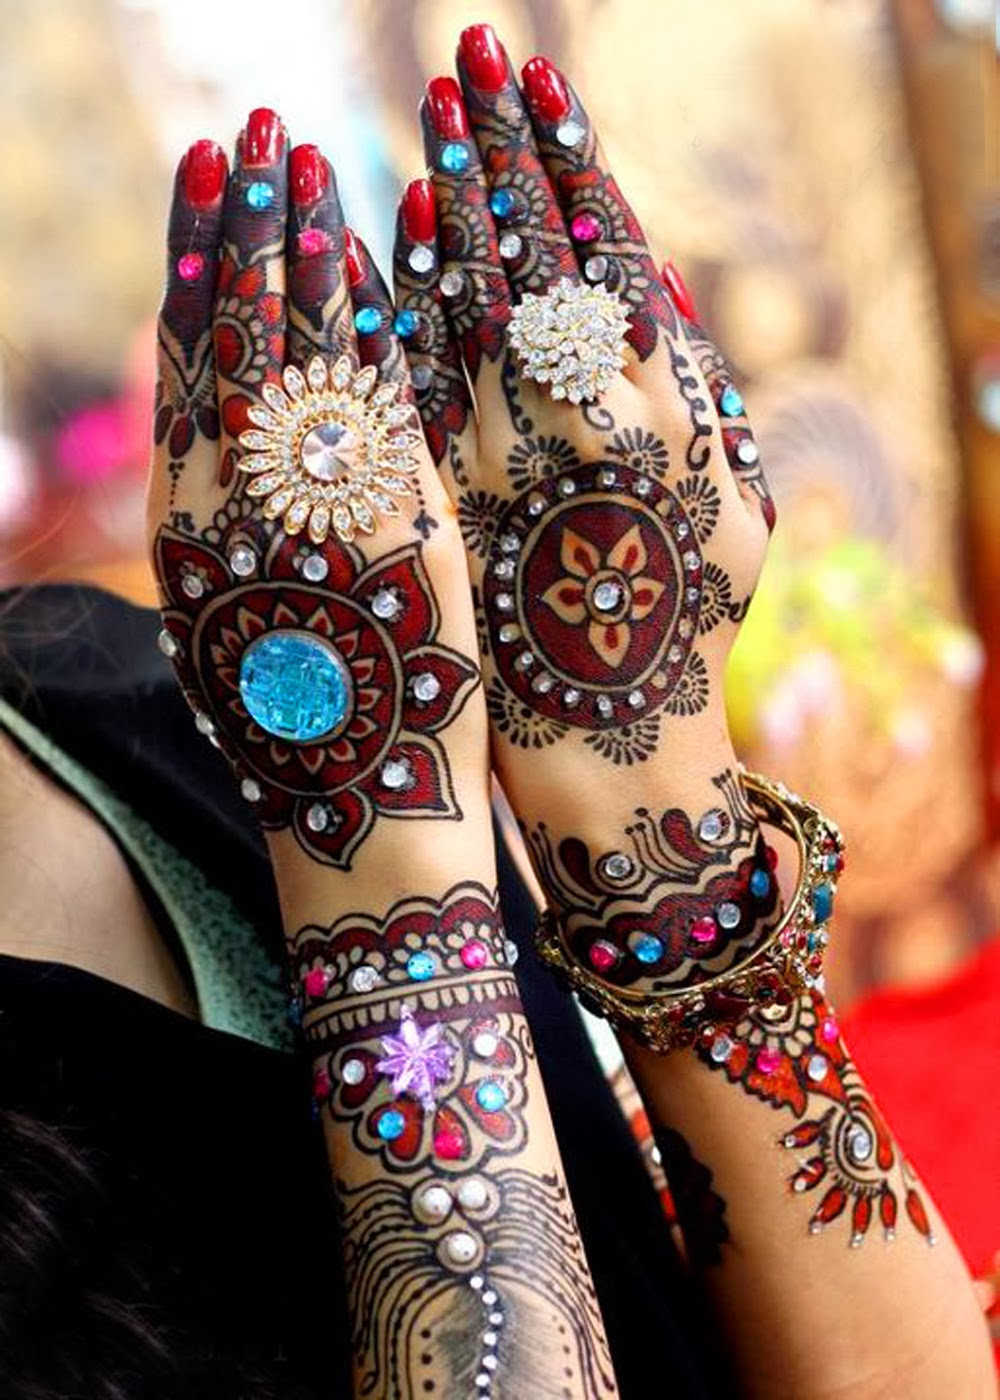 Pakistani Mehndi Design For Hands - Latest Mehndi Designs ...